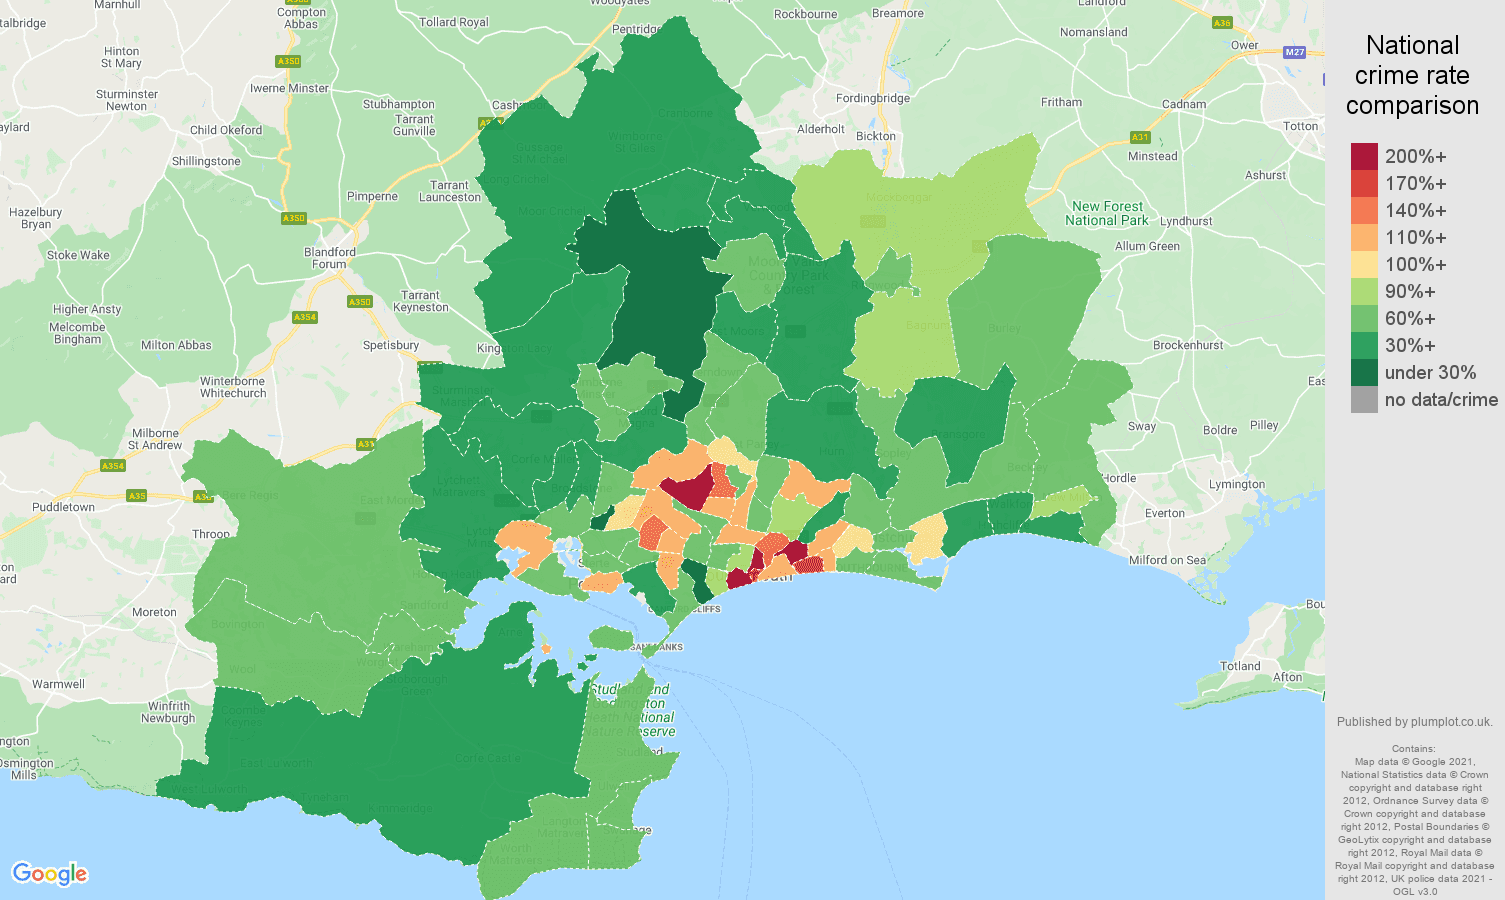 Bournemouth violent crime rate comparison map